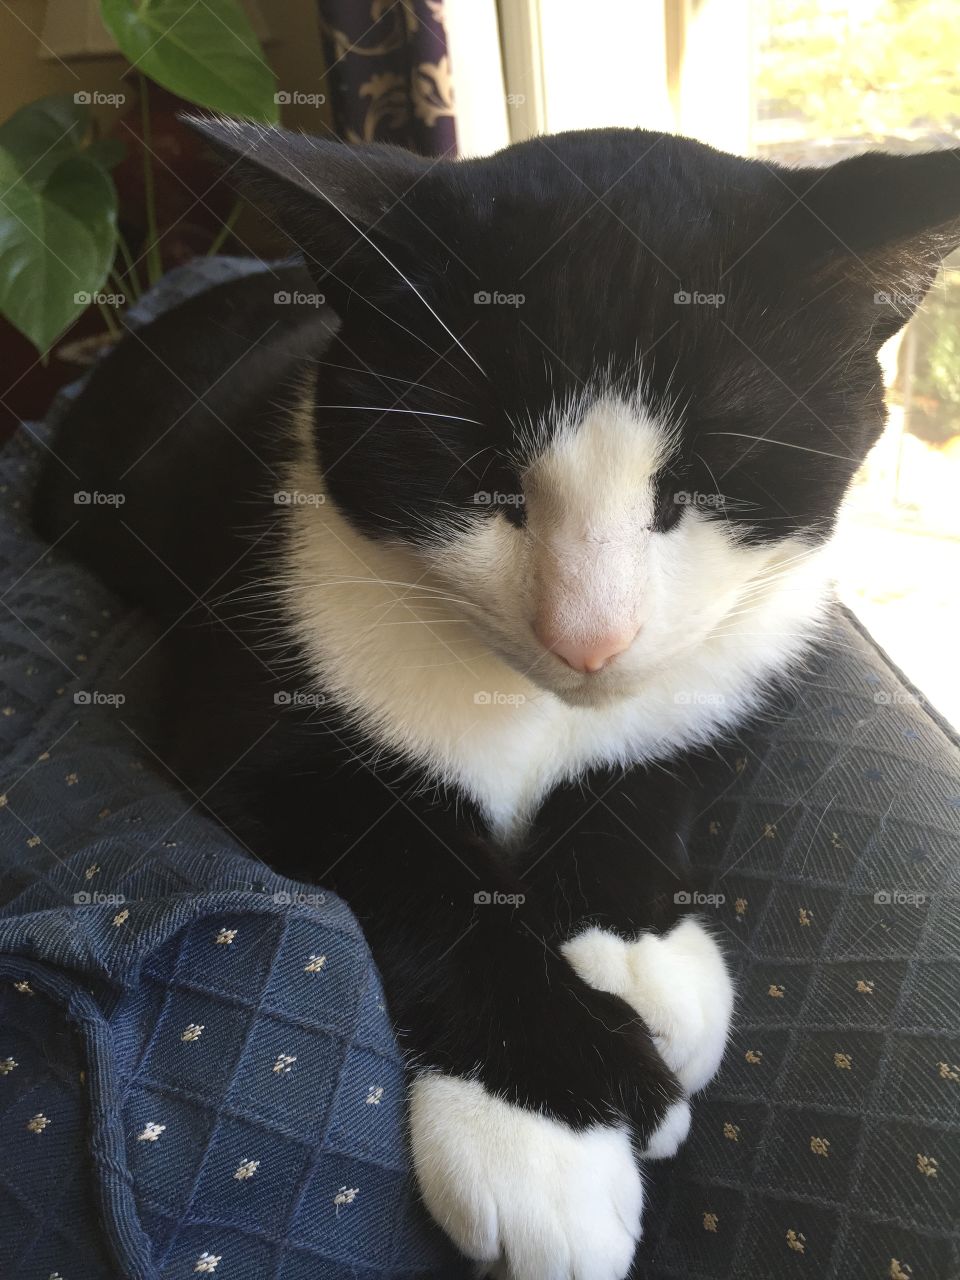 My beautiful tuxedo cat 